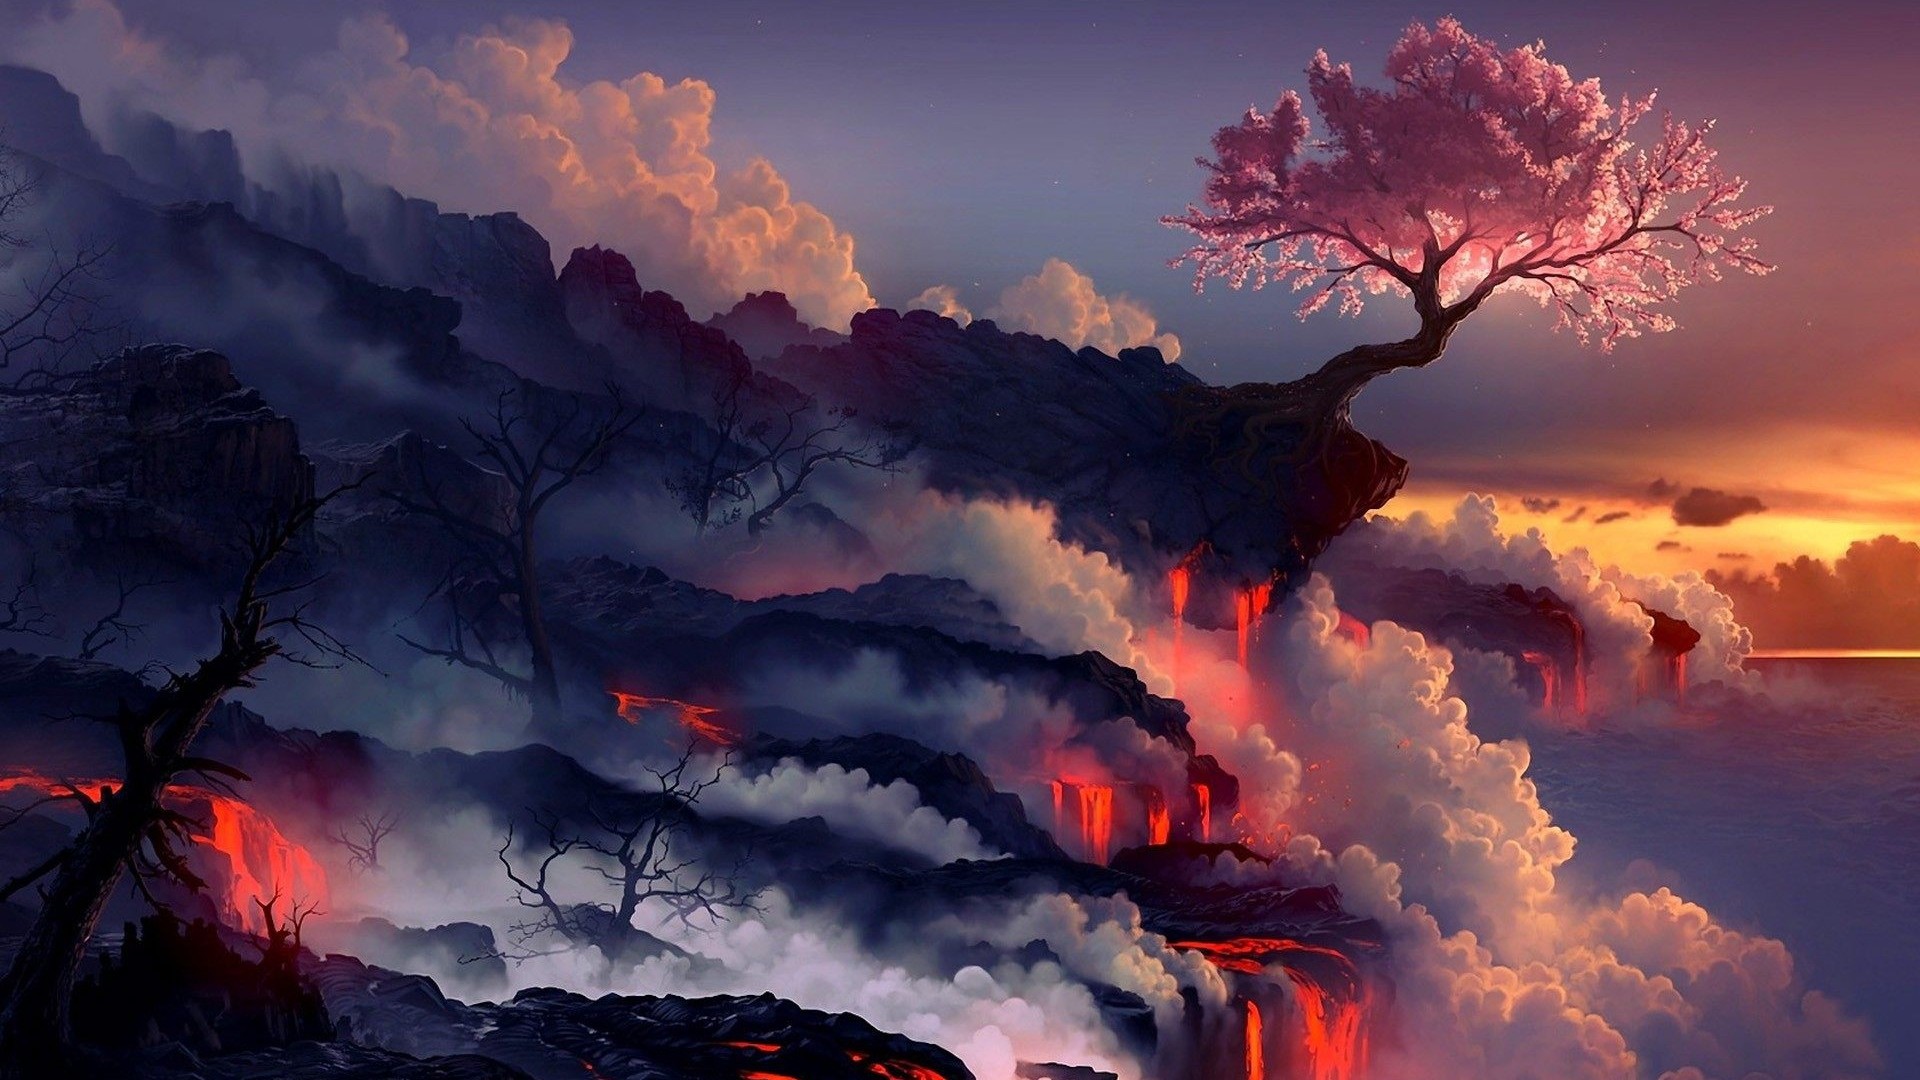 1920x1080 sakura-tree-lava-fantasy-wallpaper-.jpg (1920Ã1080) | Pictures |  Pinterest | Internet